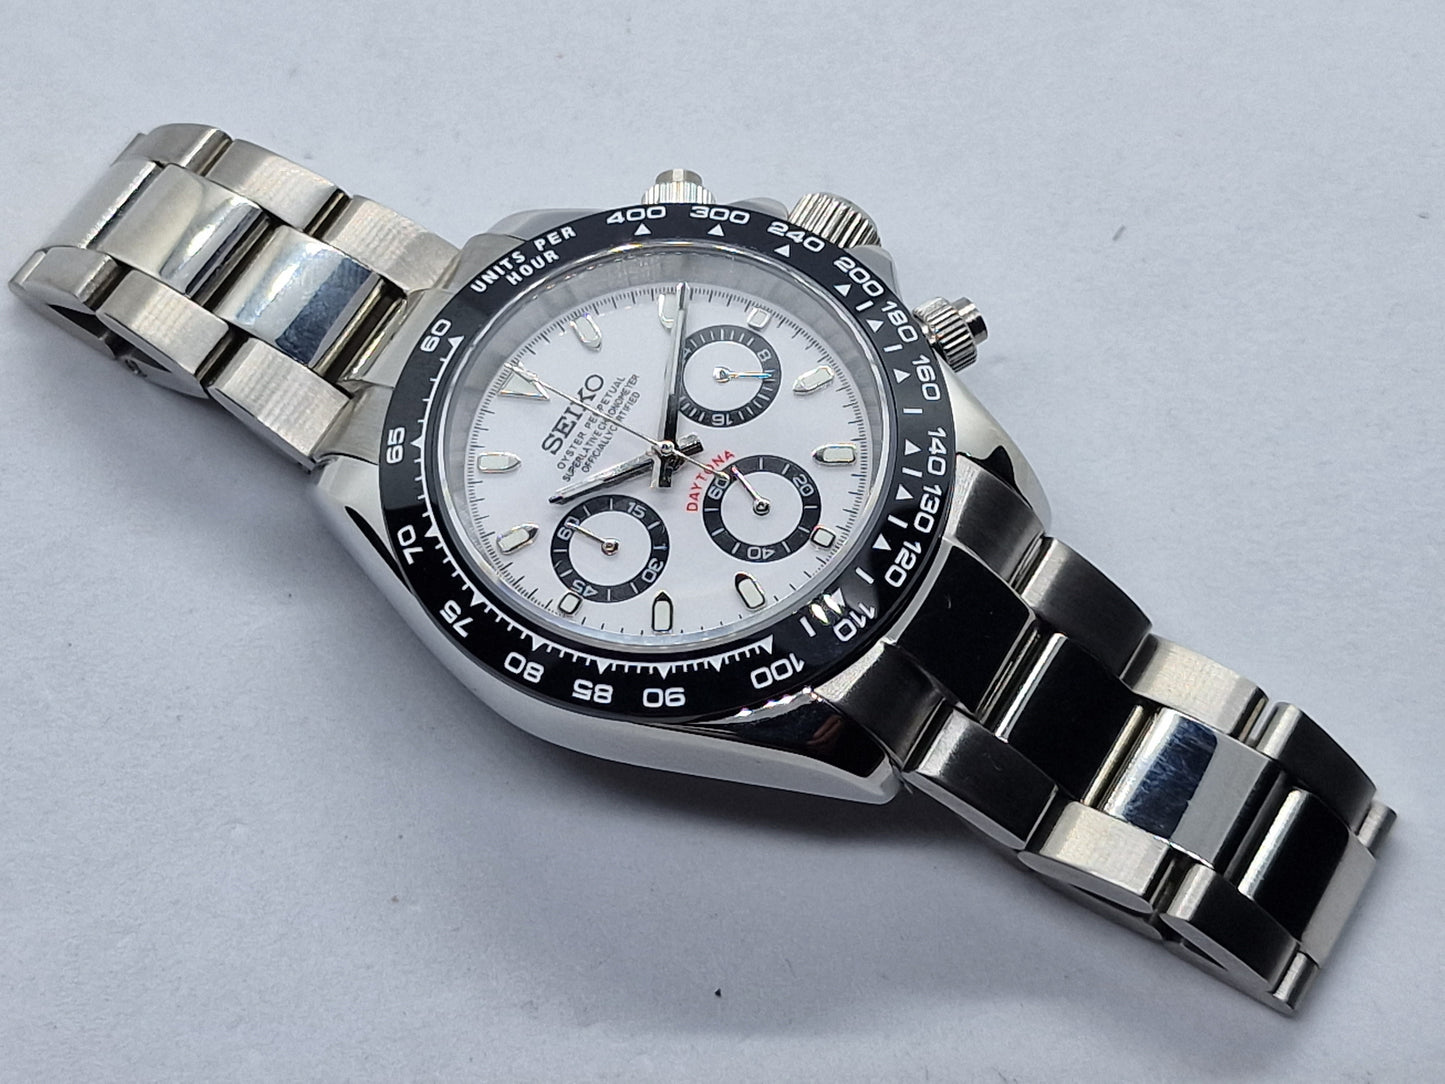 Seiko Mod Daytona cronografo bianco Vk63 quarzo lunetta ceramica